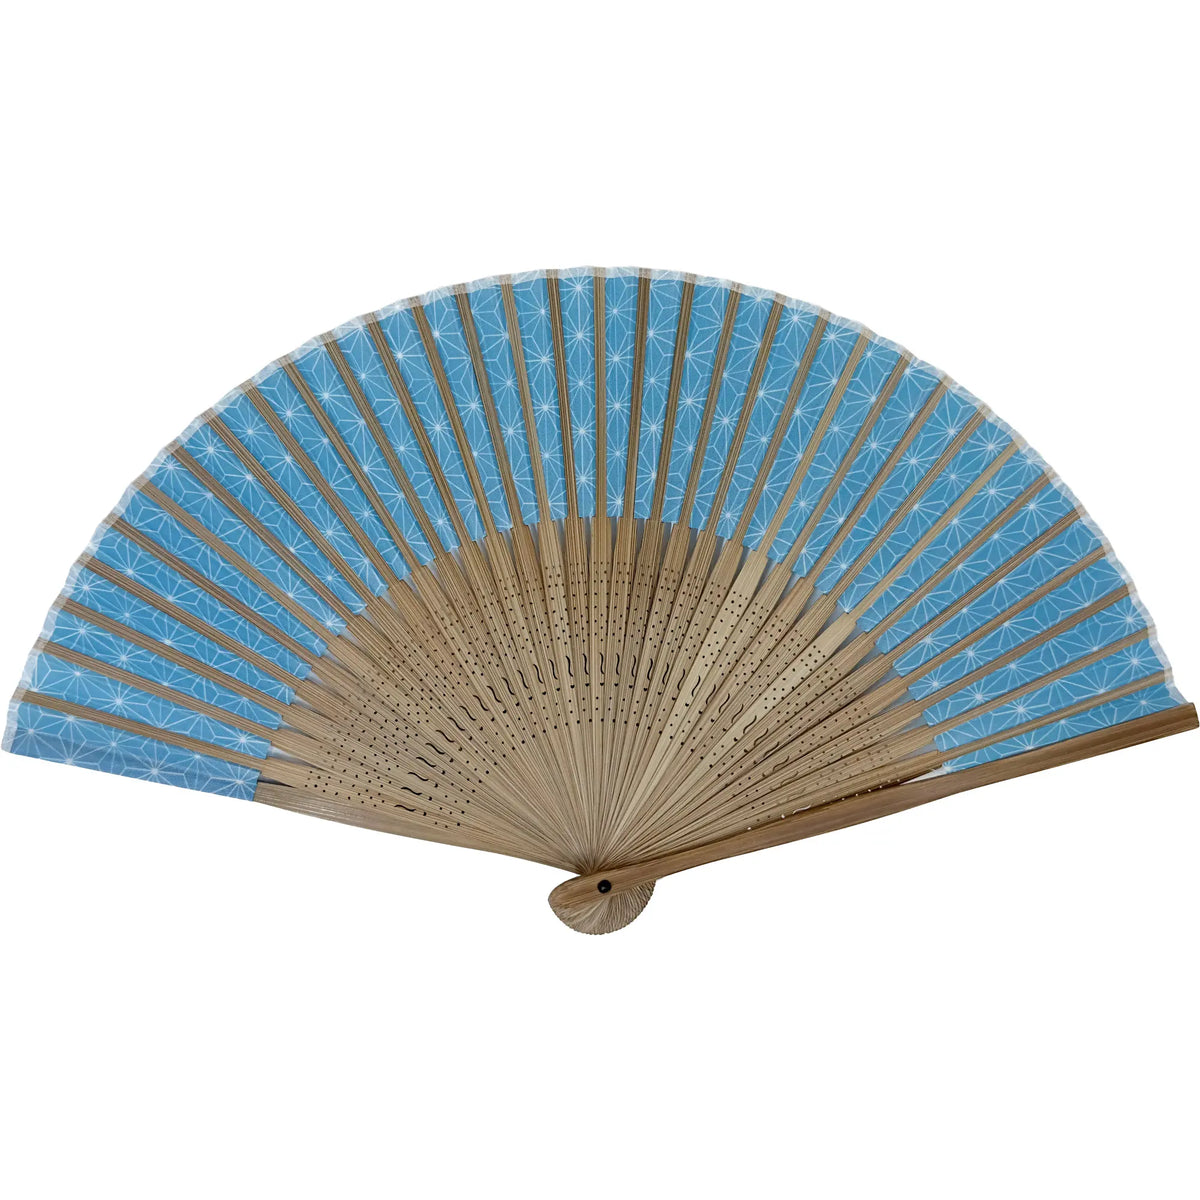 Edo patterned folding fan No.08 Asanoha, Asagi-iro